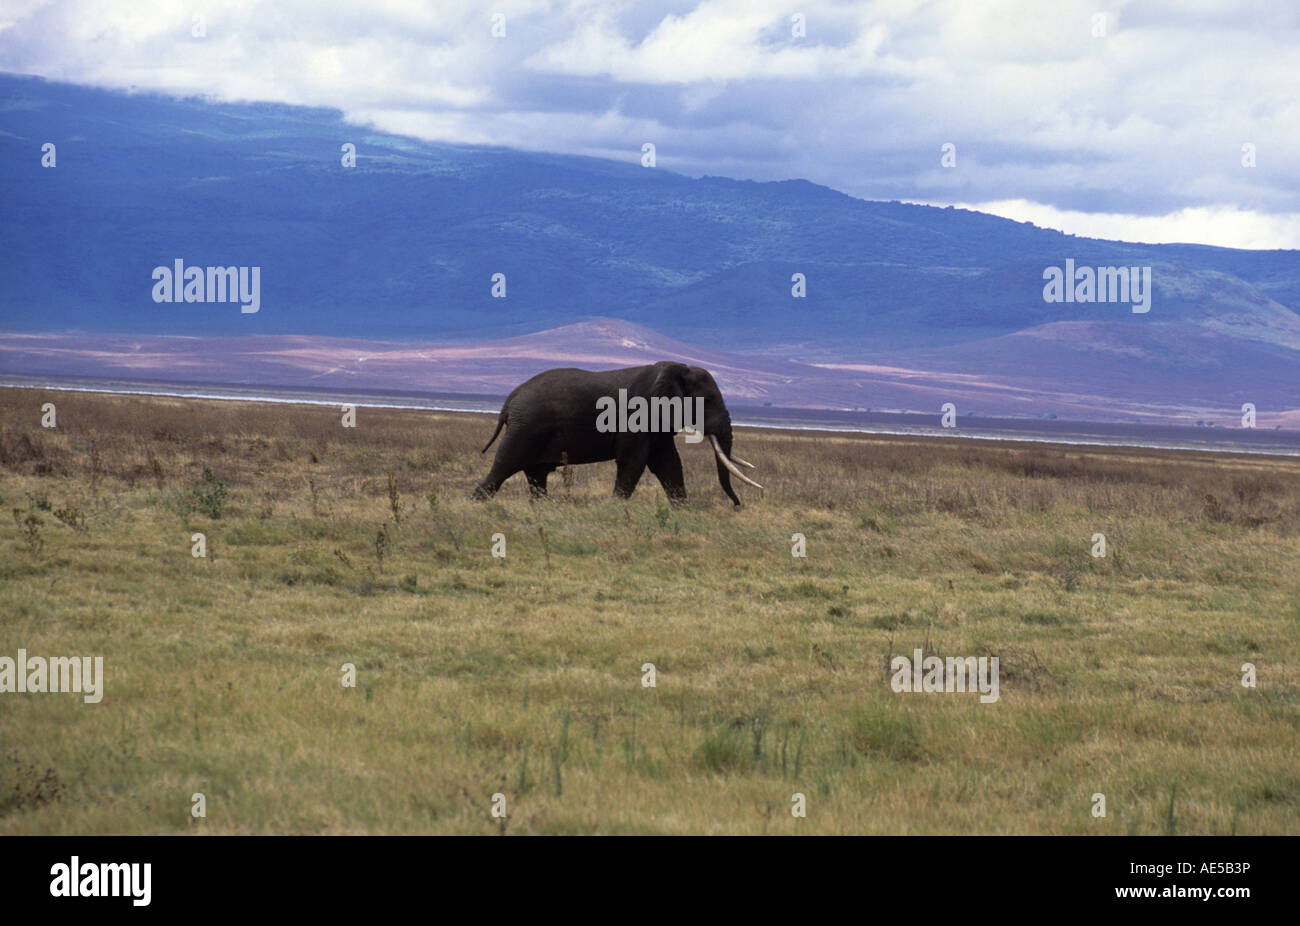 An African Elephant in Ngorongoro Conservation Area, Tanzania. Stock Photo